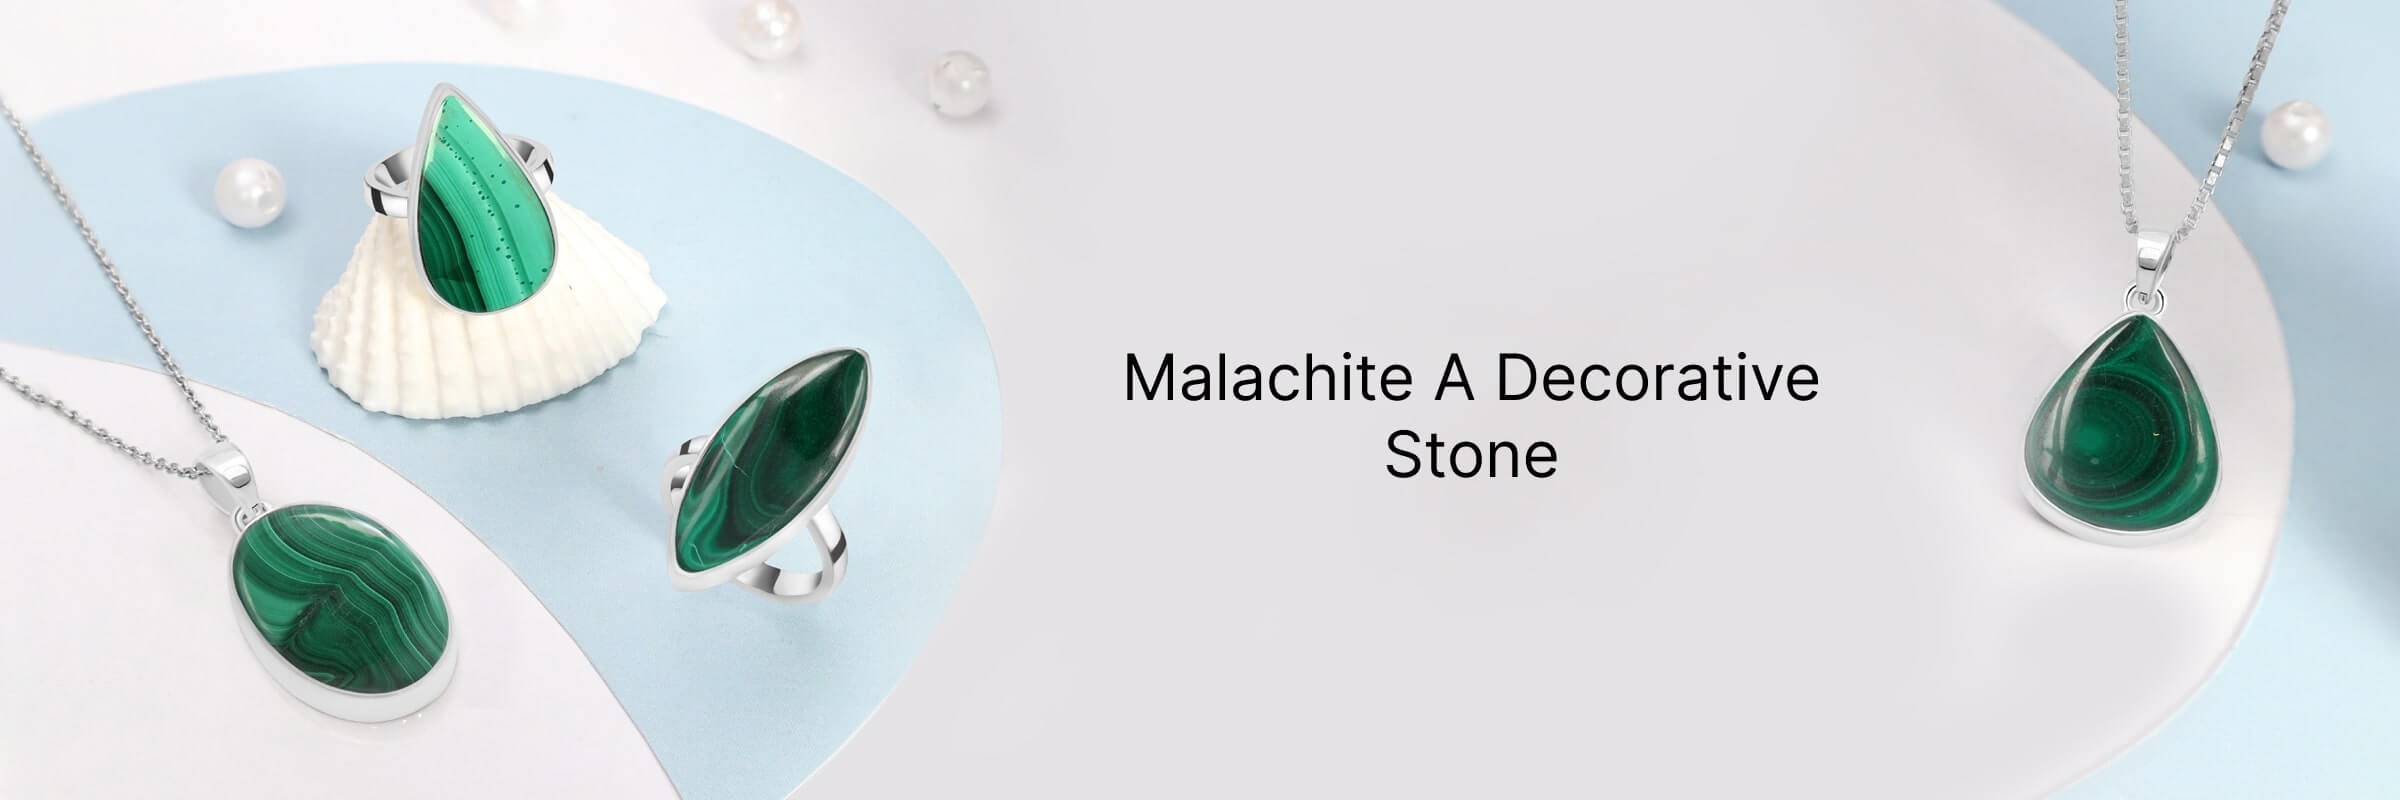 Malachite Uses